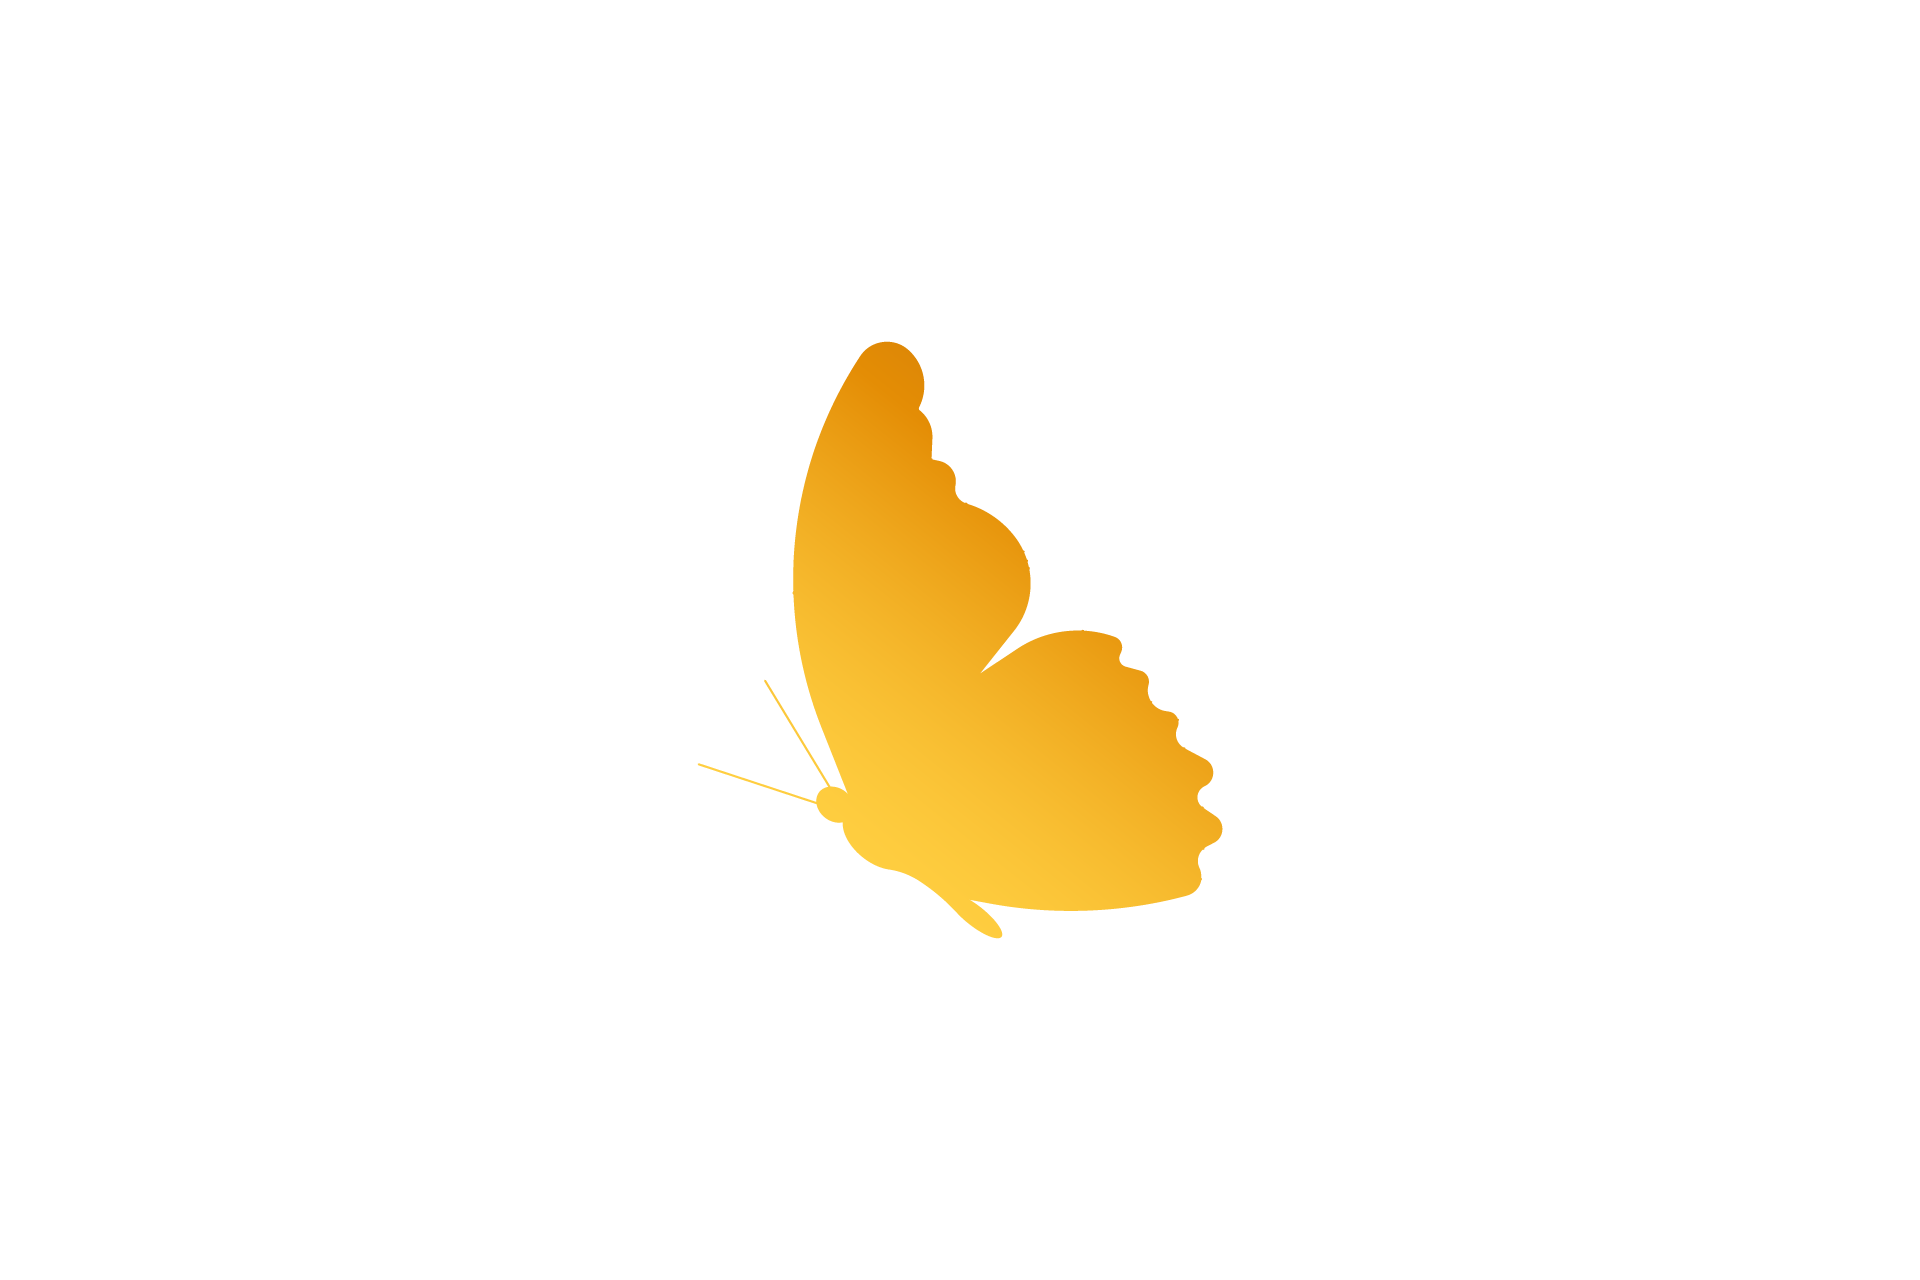 Gold Butterflies and Azalea · Creative Fabrica